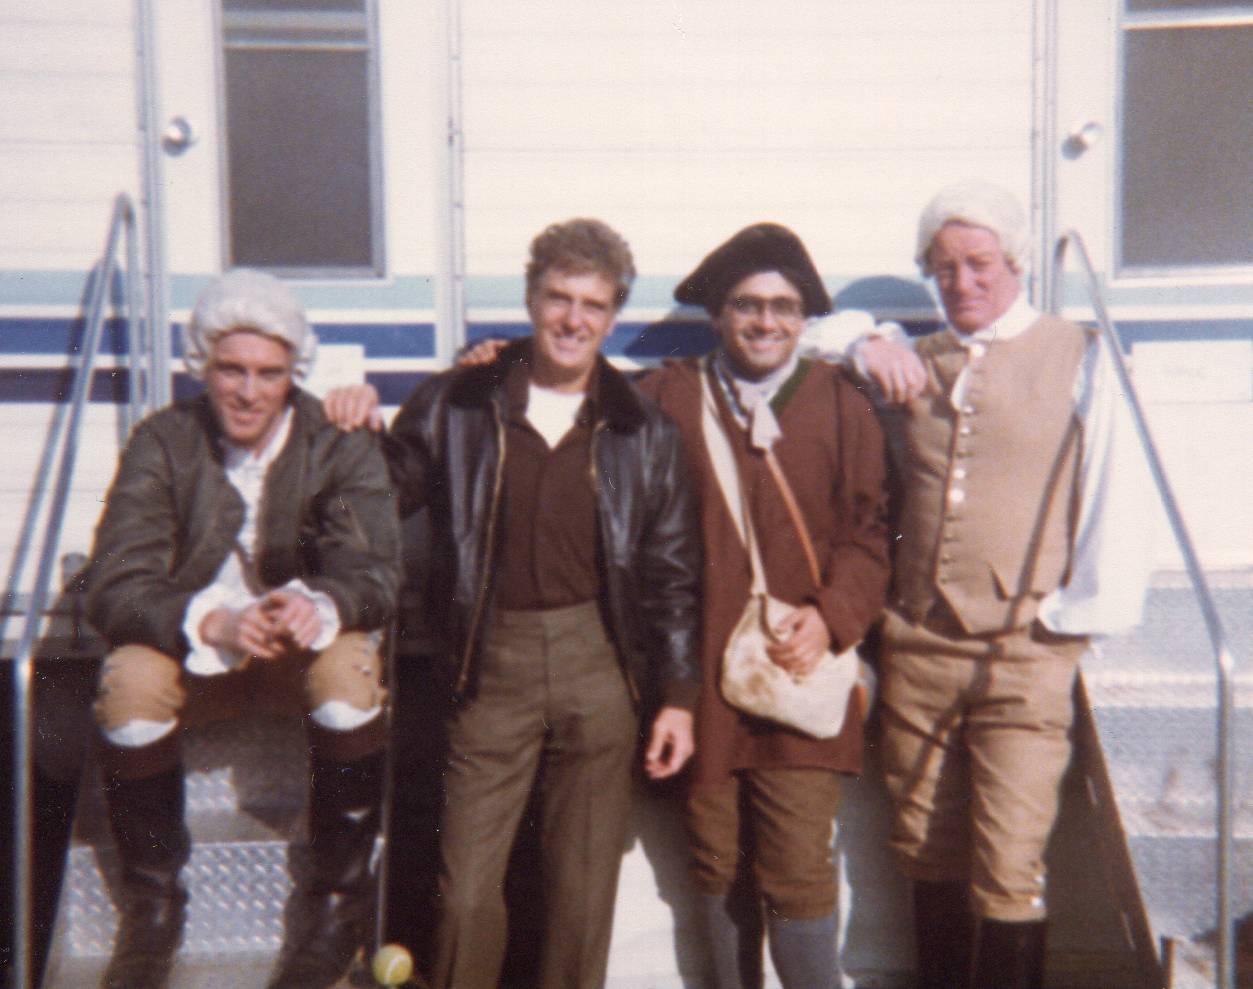 George Washington Mini-Series. Left to Right: John Glover, Robert Stack, John Primerano, Jeremy Kemp